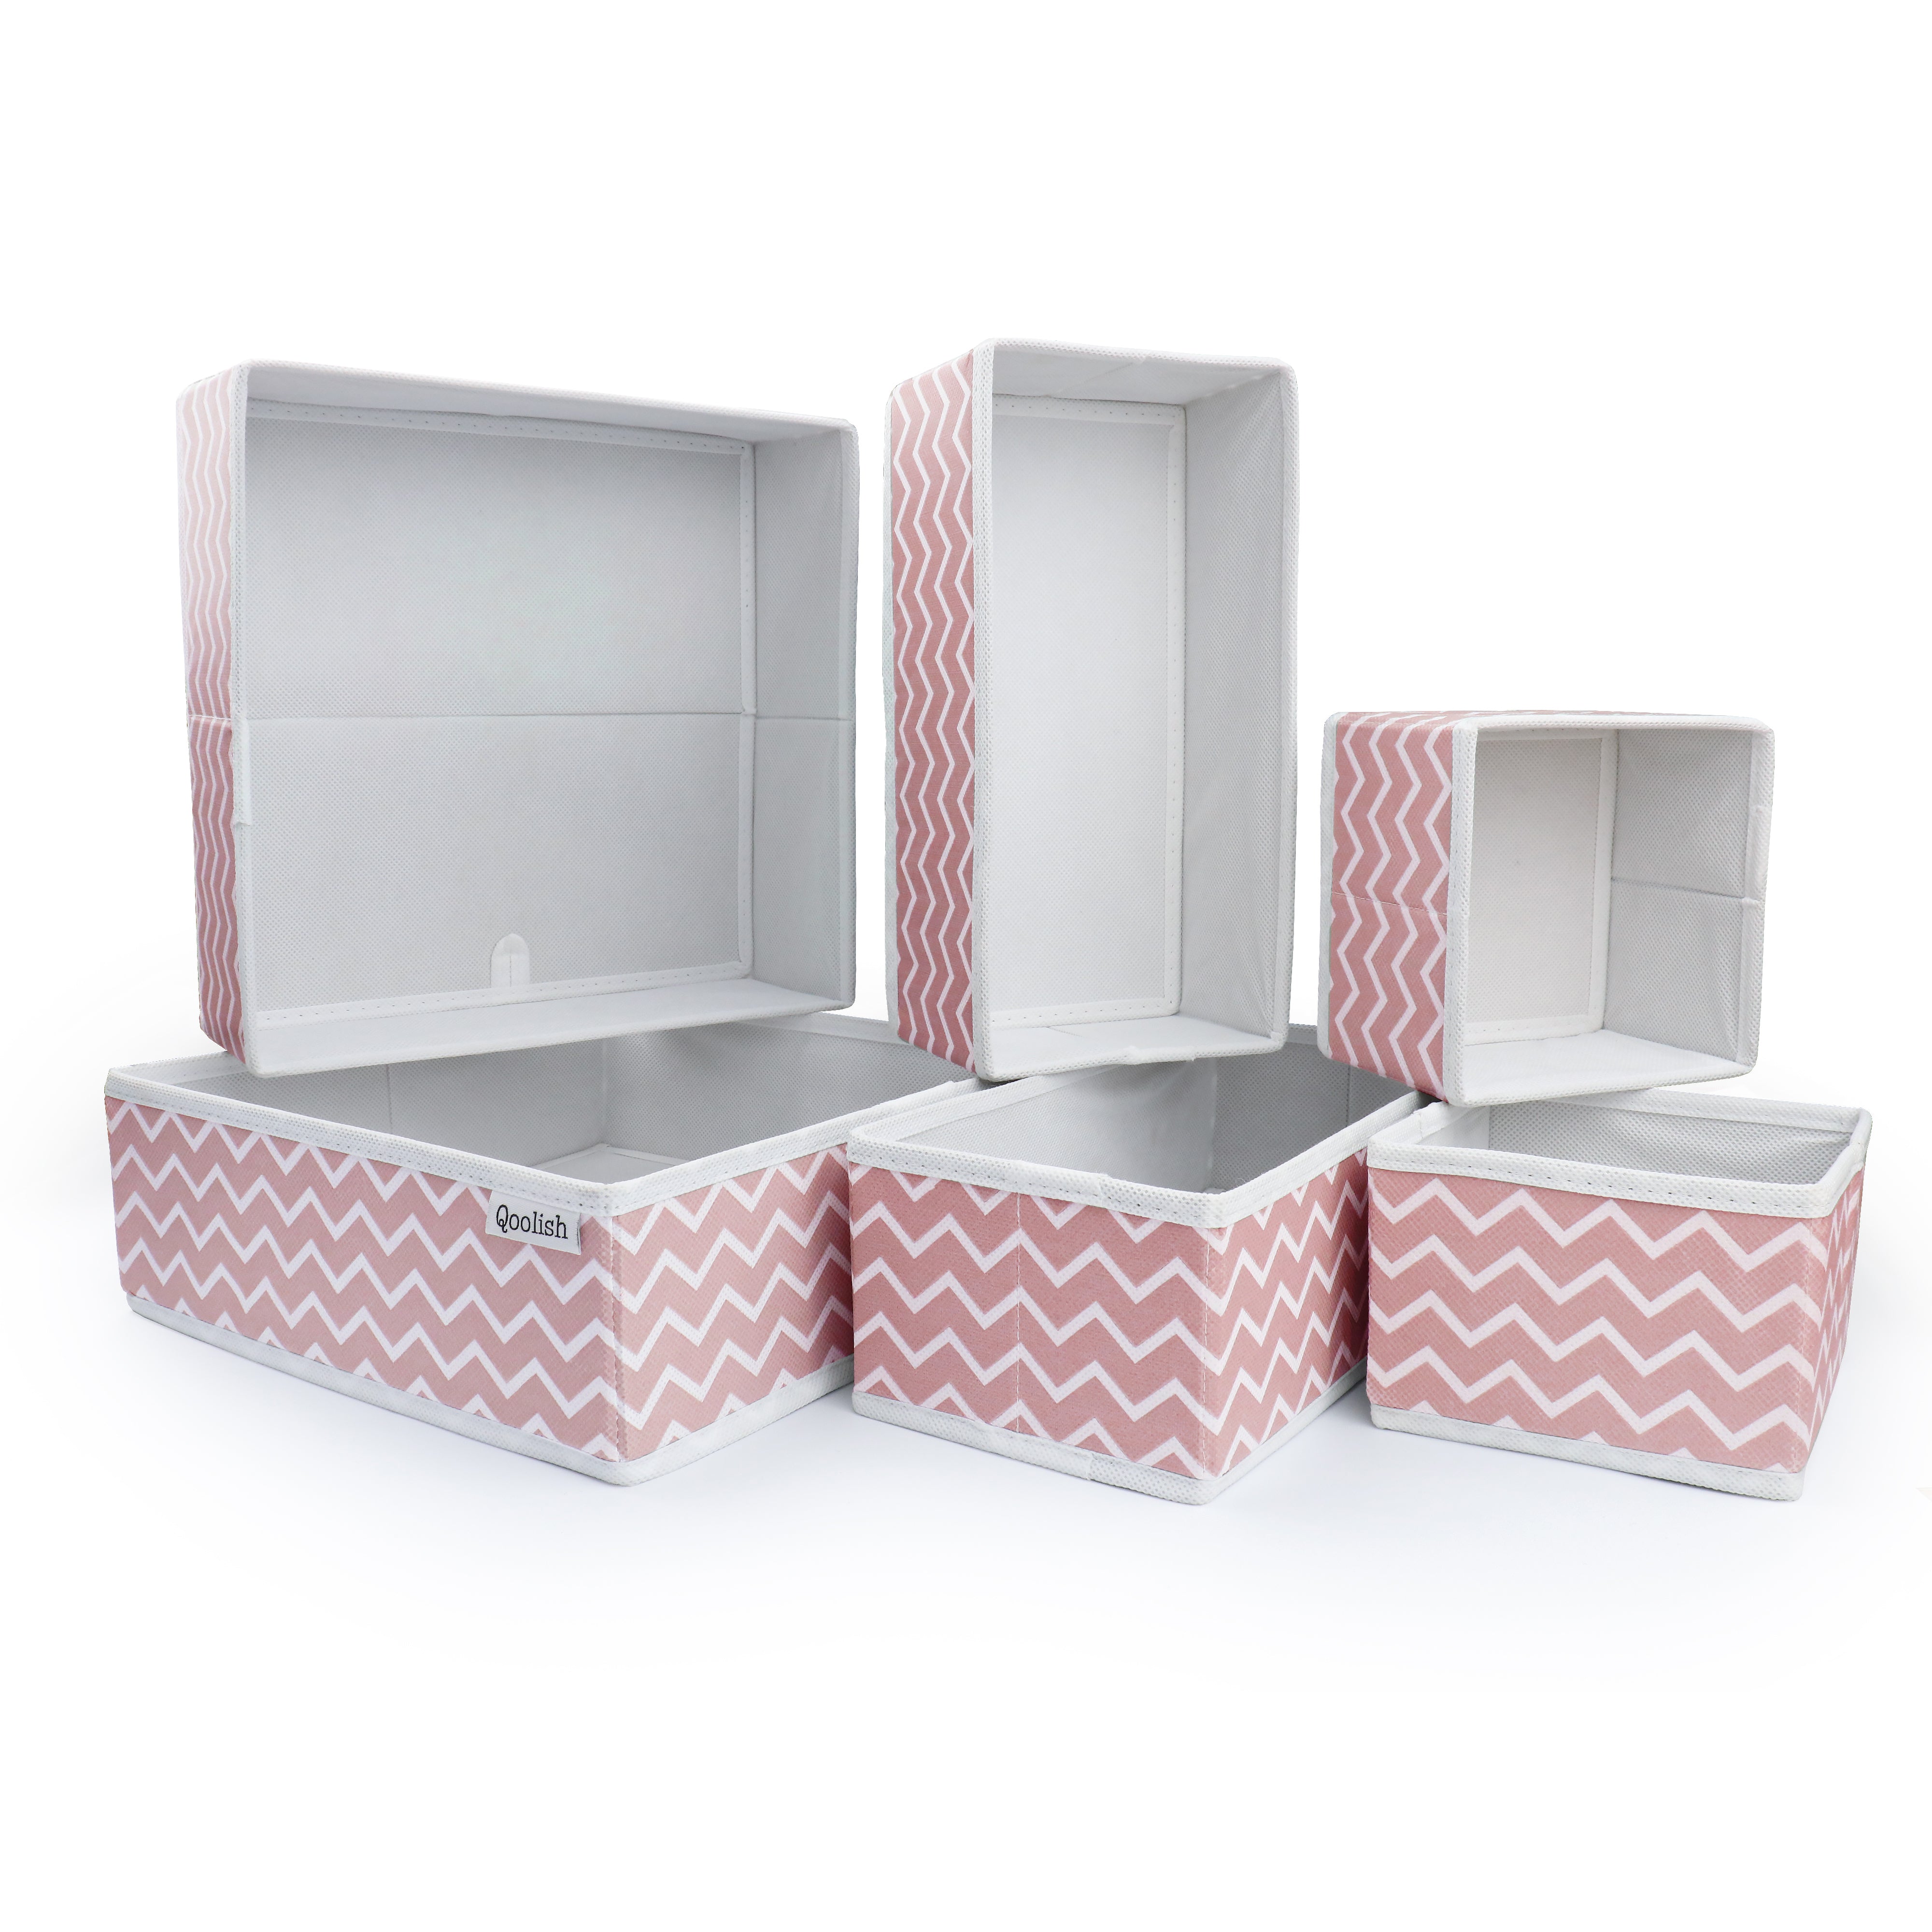 Pack of 4 White Stripes Drawer Organizers Boxes - Qoolish Home Storage